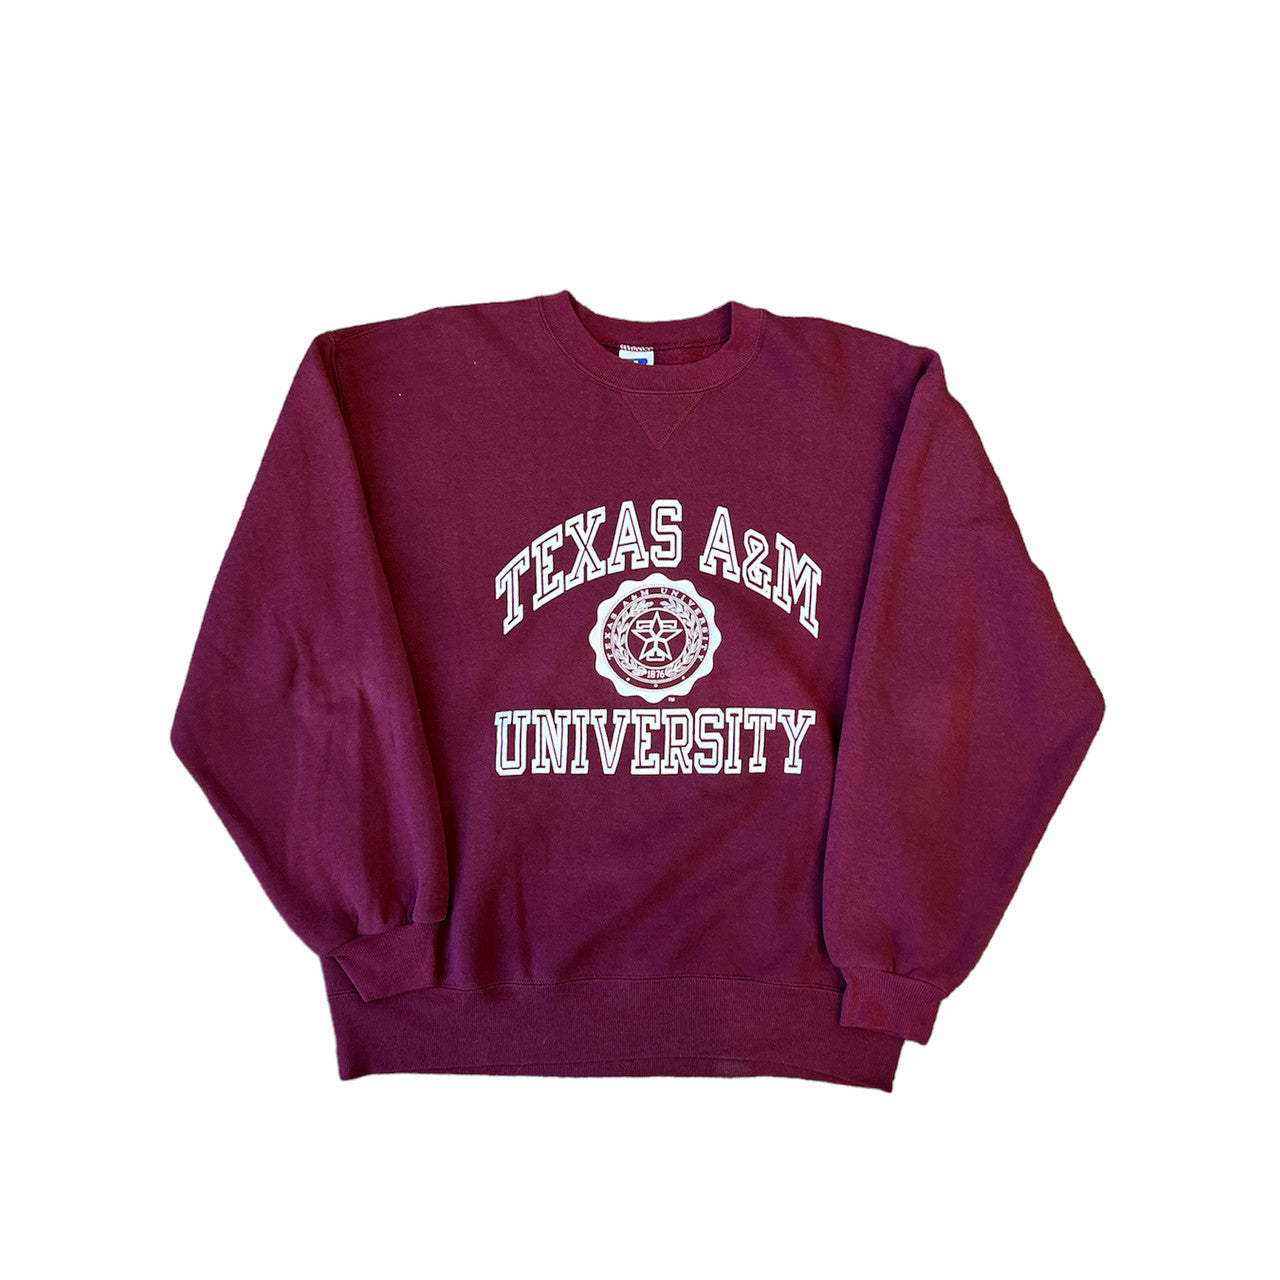 Vintage Texas A&M University Sweatshirt